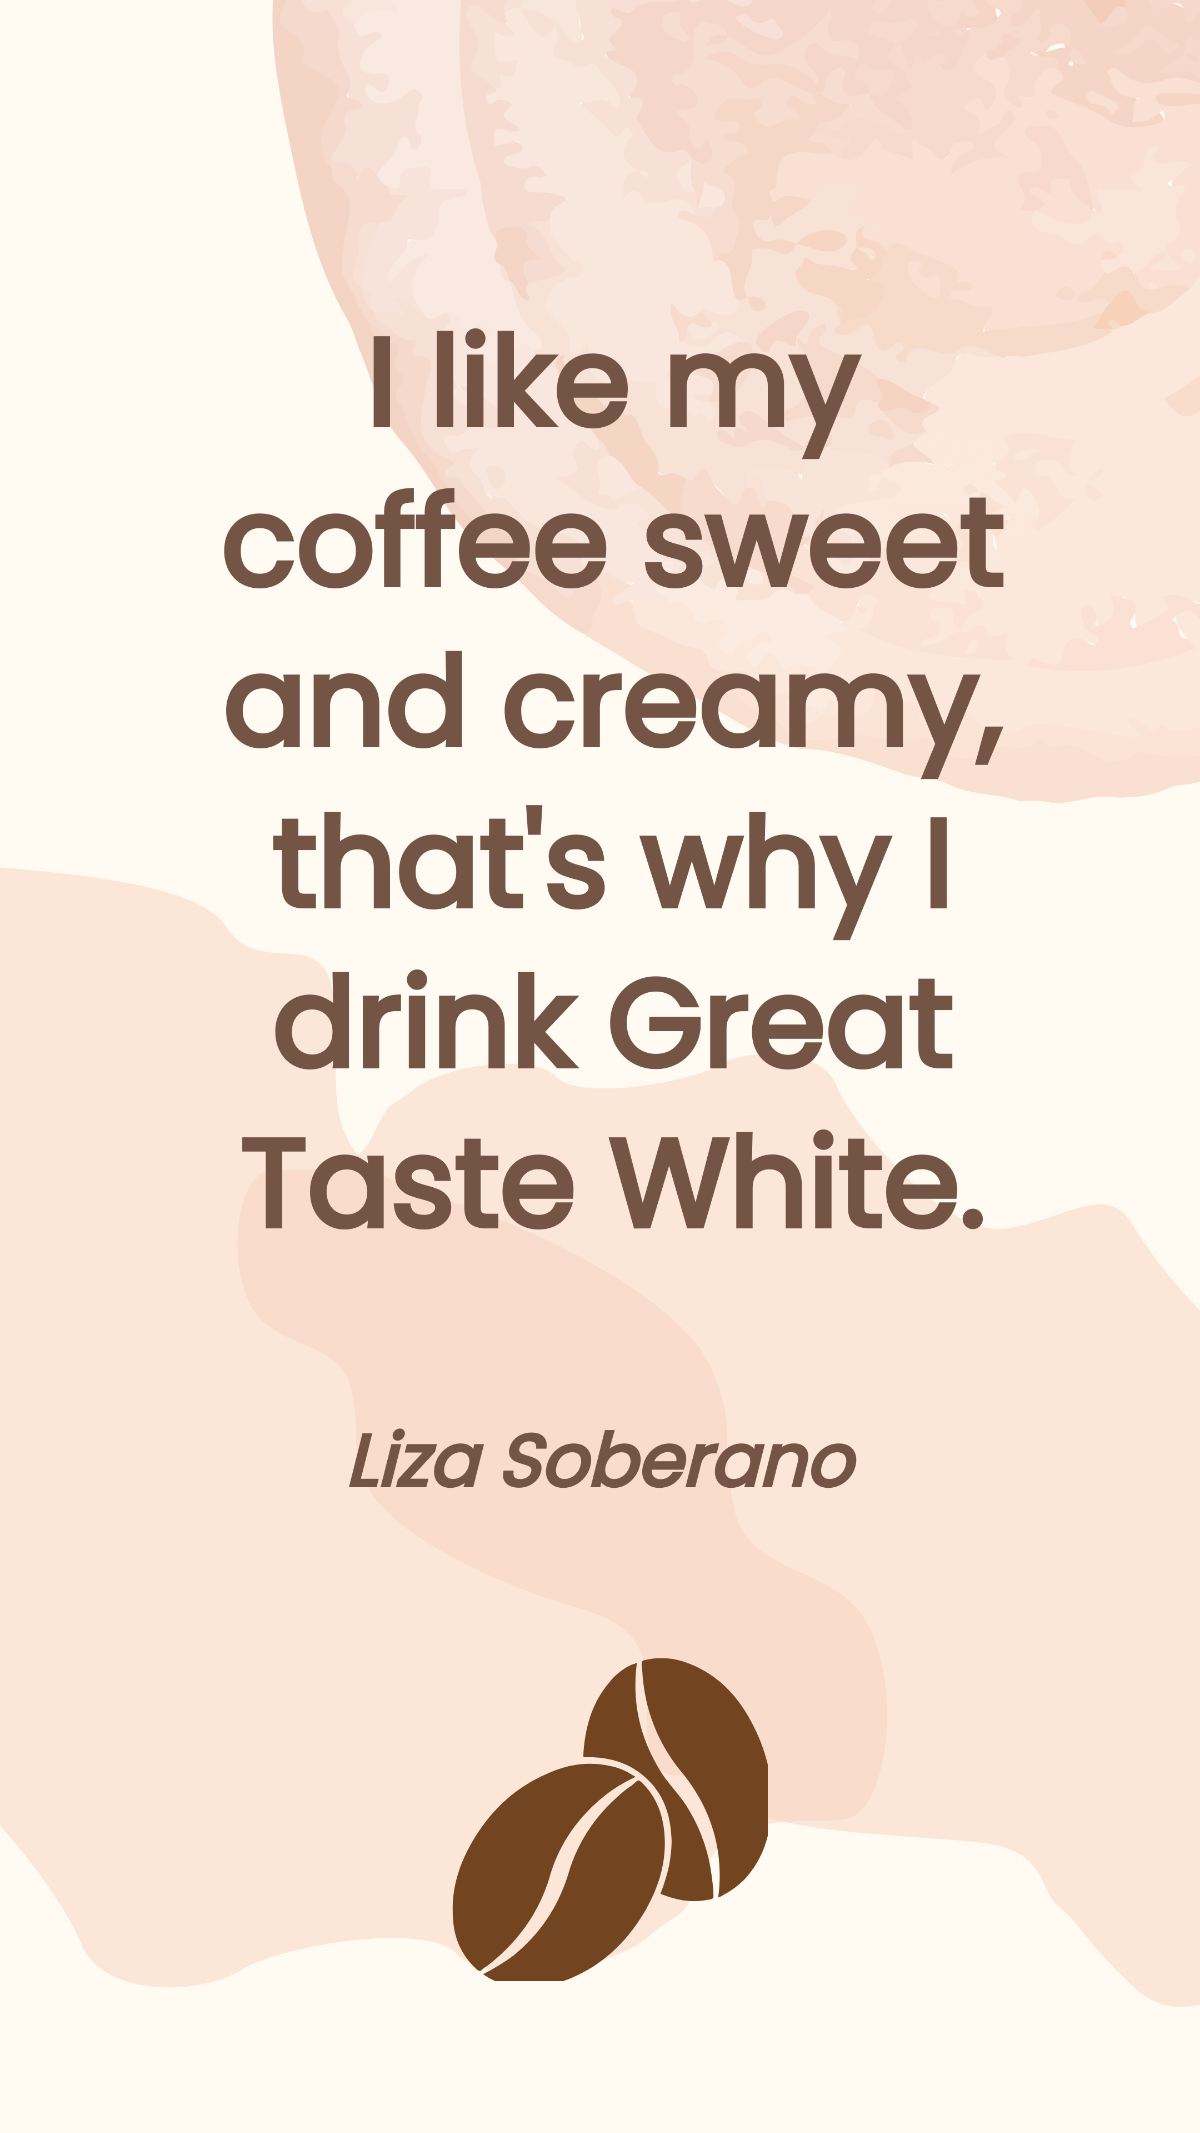 Liza Soberano - I like my coffee sweet and creamy, that's why I drink Great Taste White.